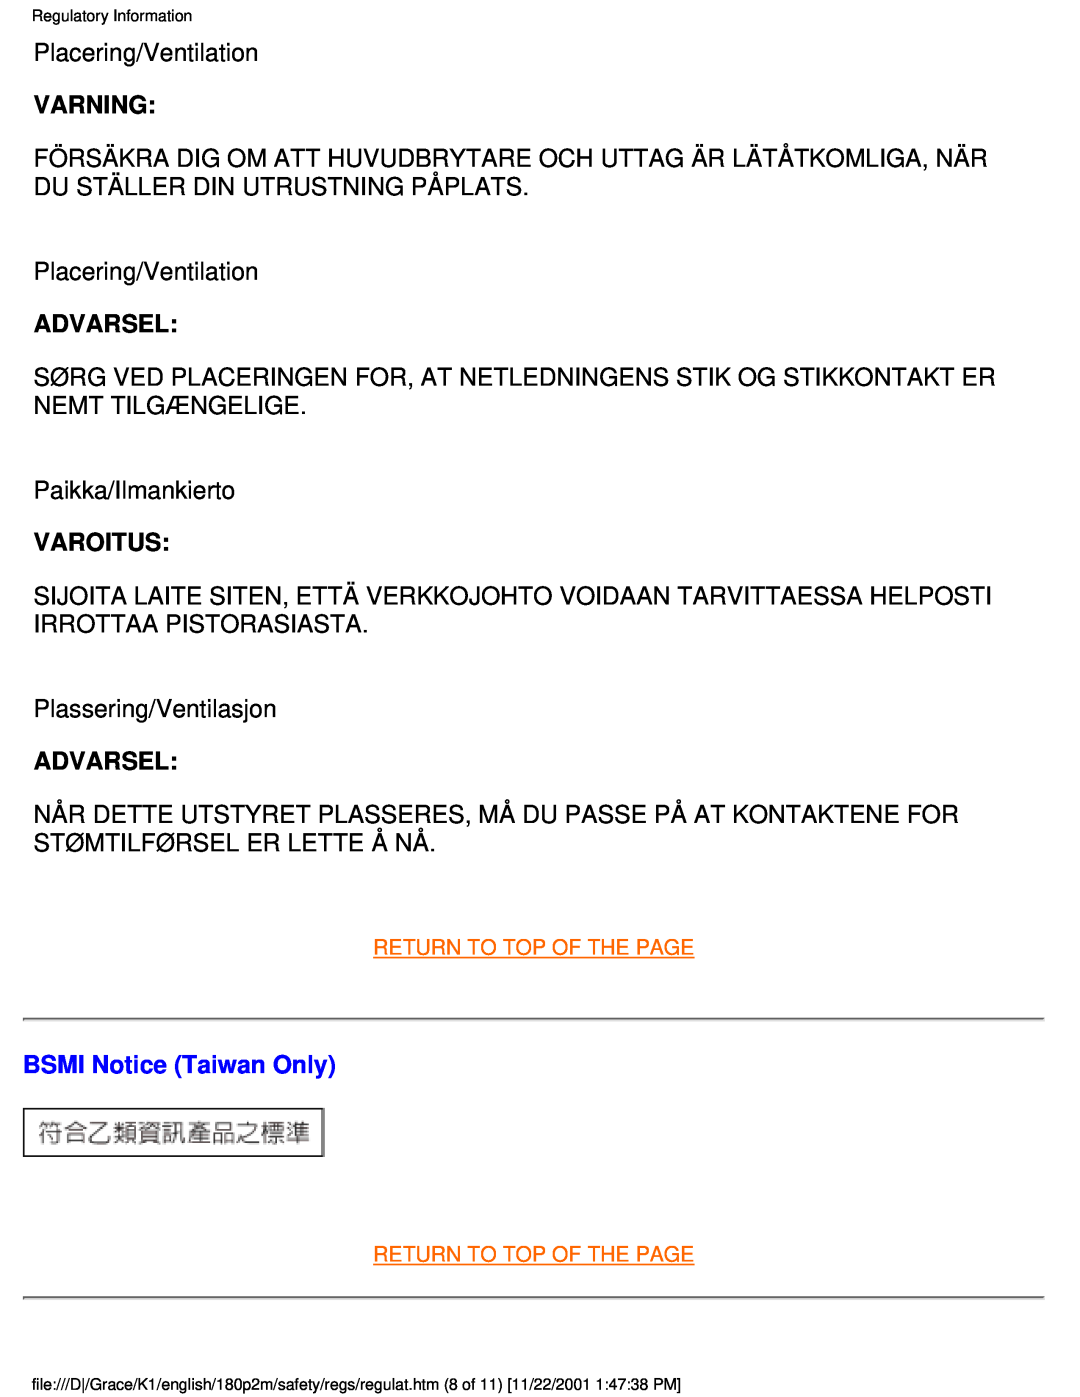 Philips 180P2M user manual Varning, Advarsel, Varoitus, BSMI Notice Taiwan Only 